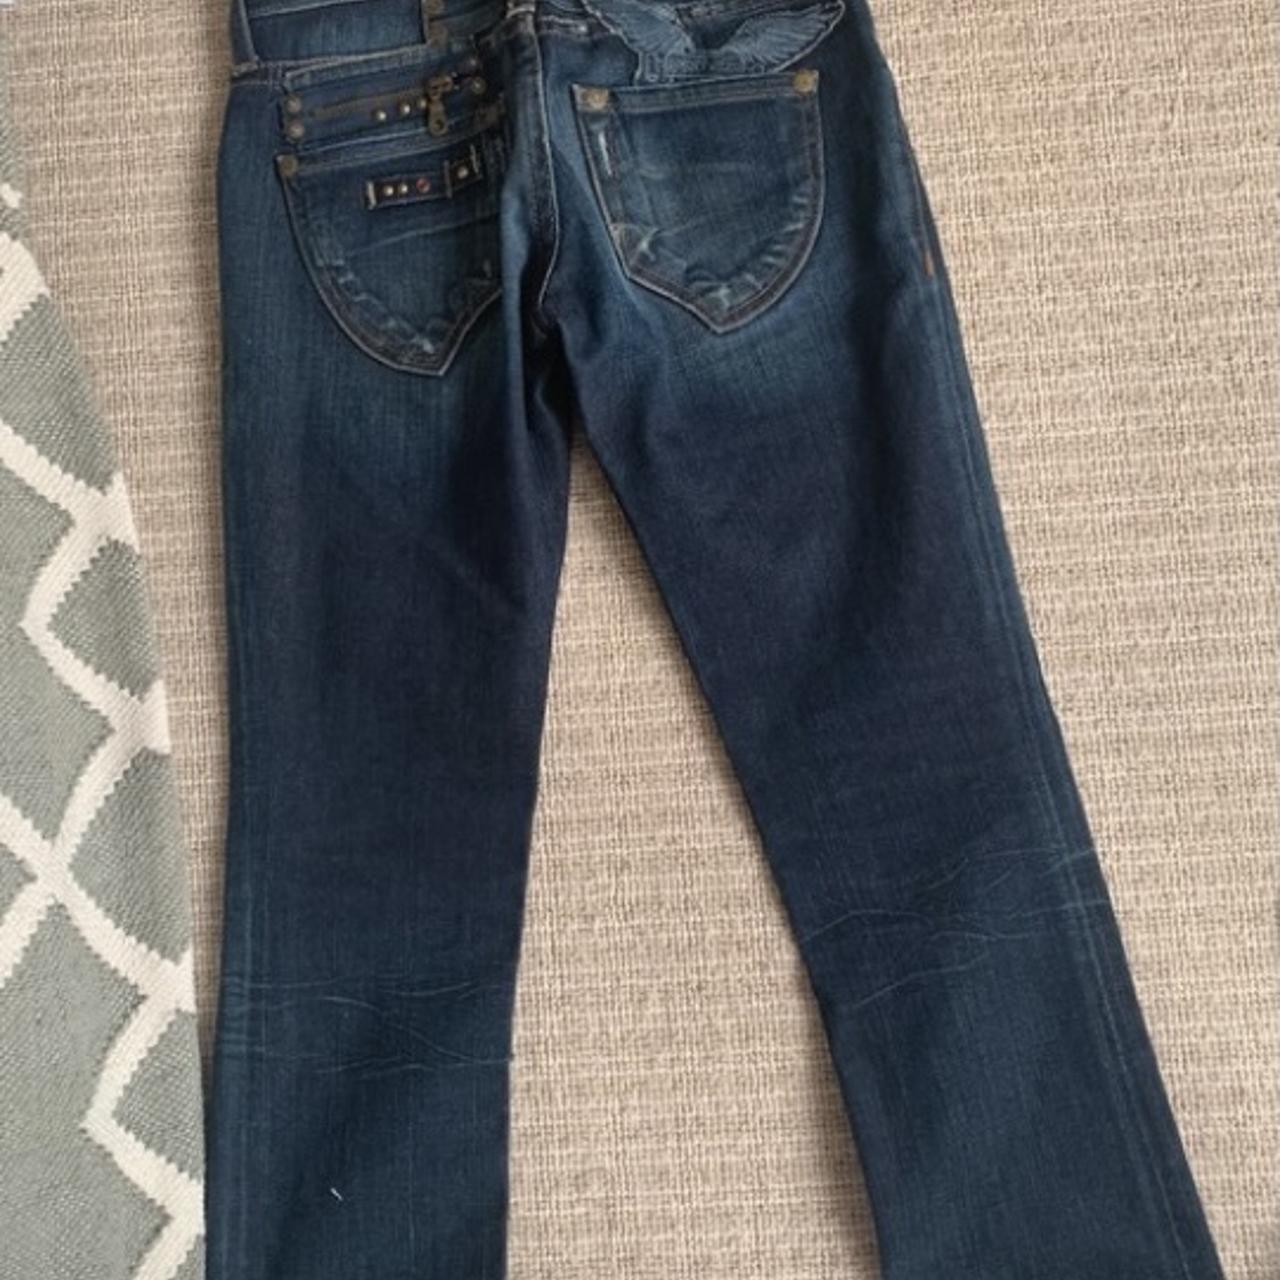 Robins jeans, very yk2. Low waist - Depop